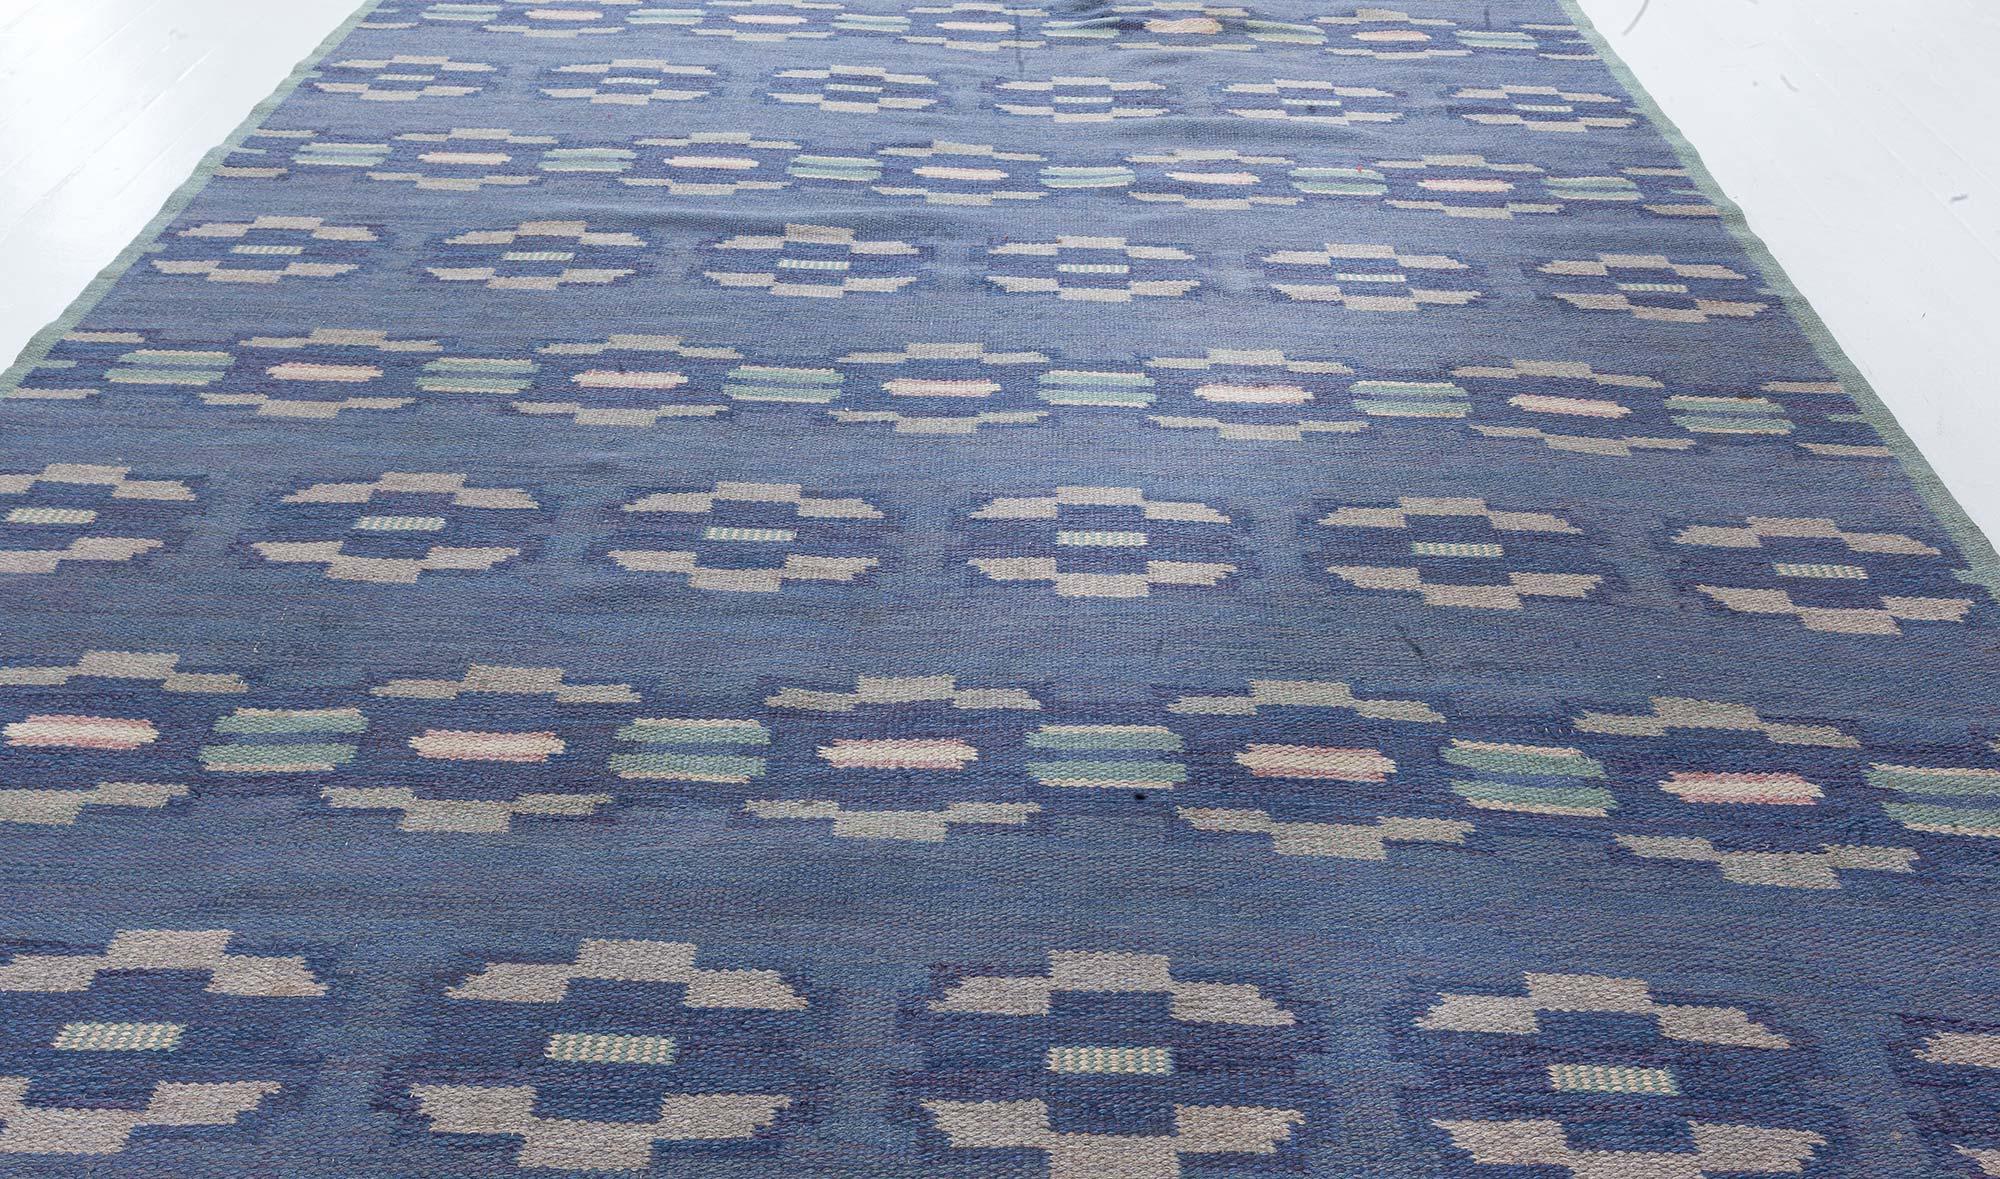 Vintage Swedish flat weave rug by A Bindd
Size: 6'3